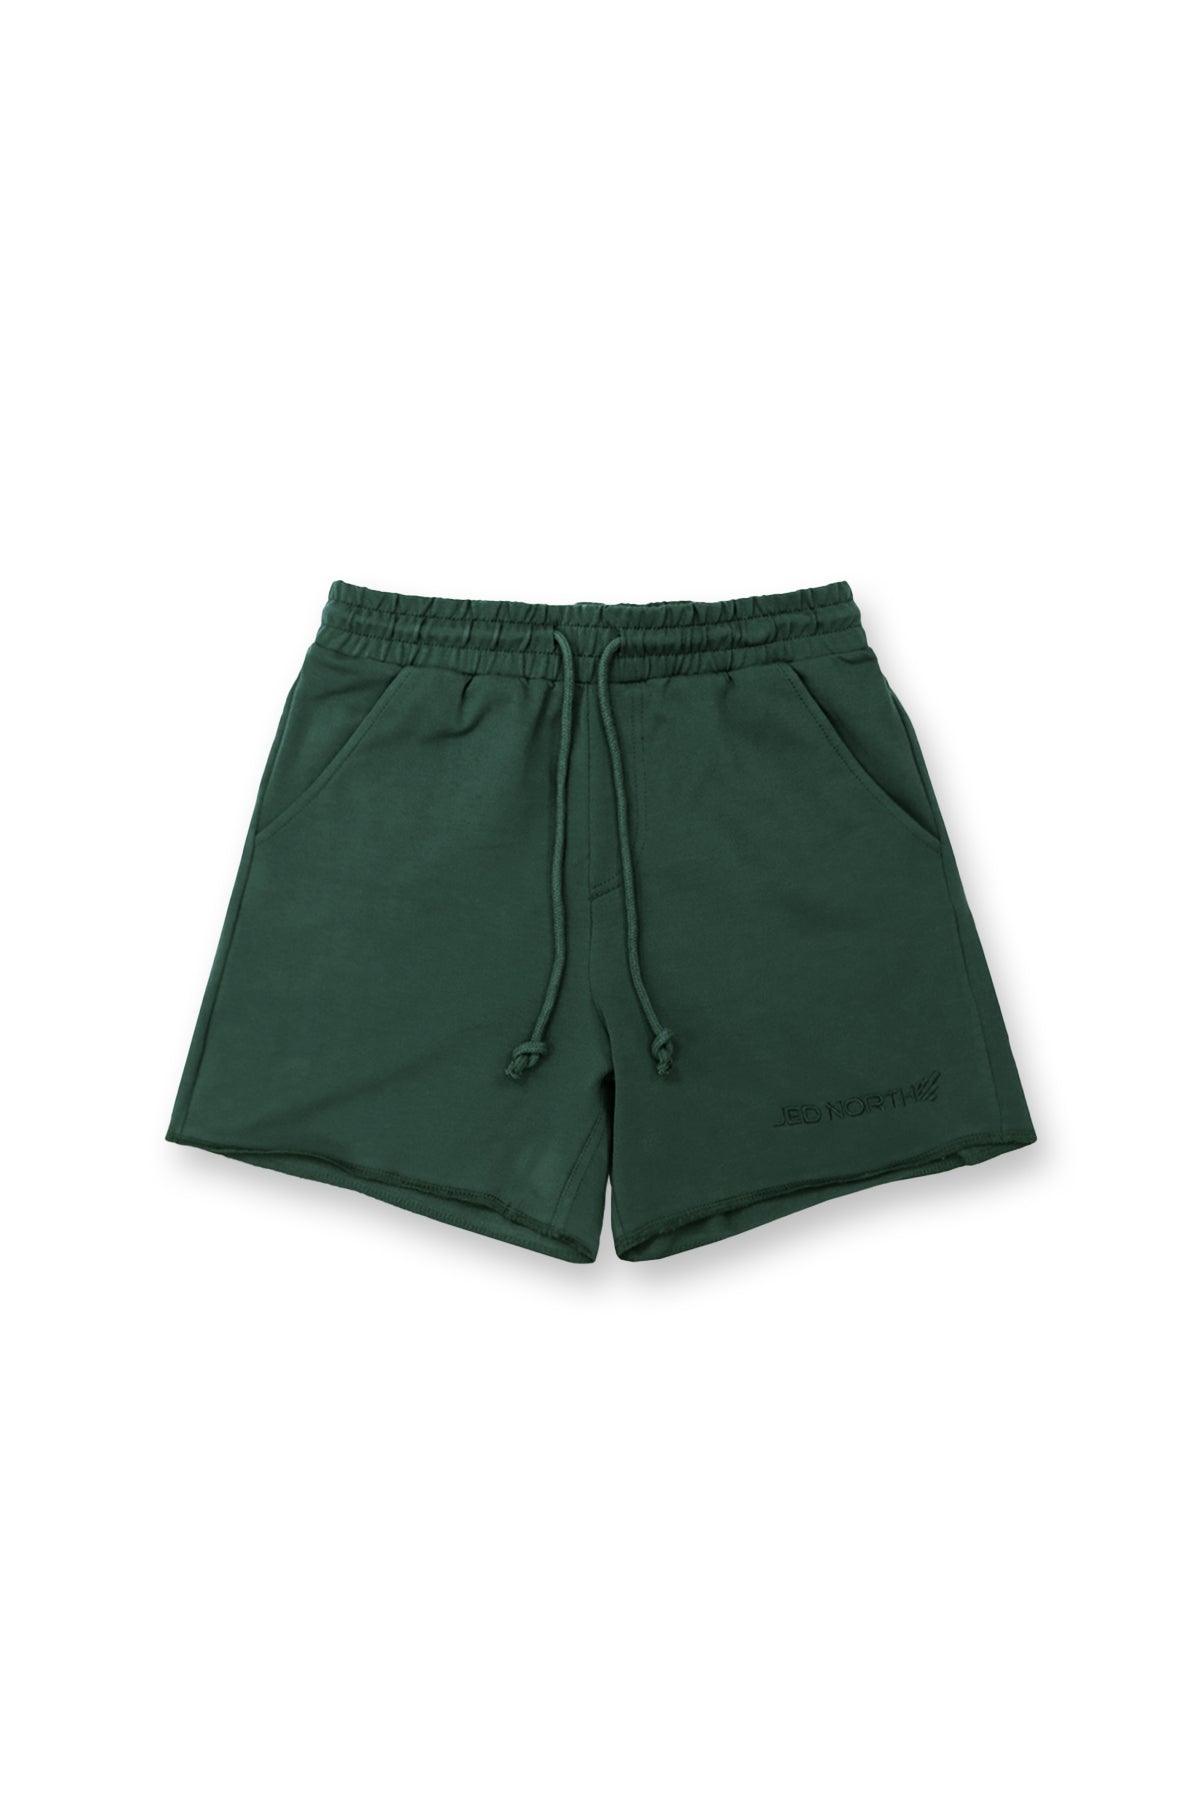 Motion 5'' Varsity Sweat Shorts - Dark Green - Jed North